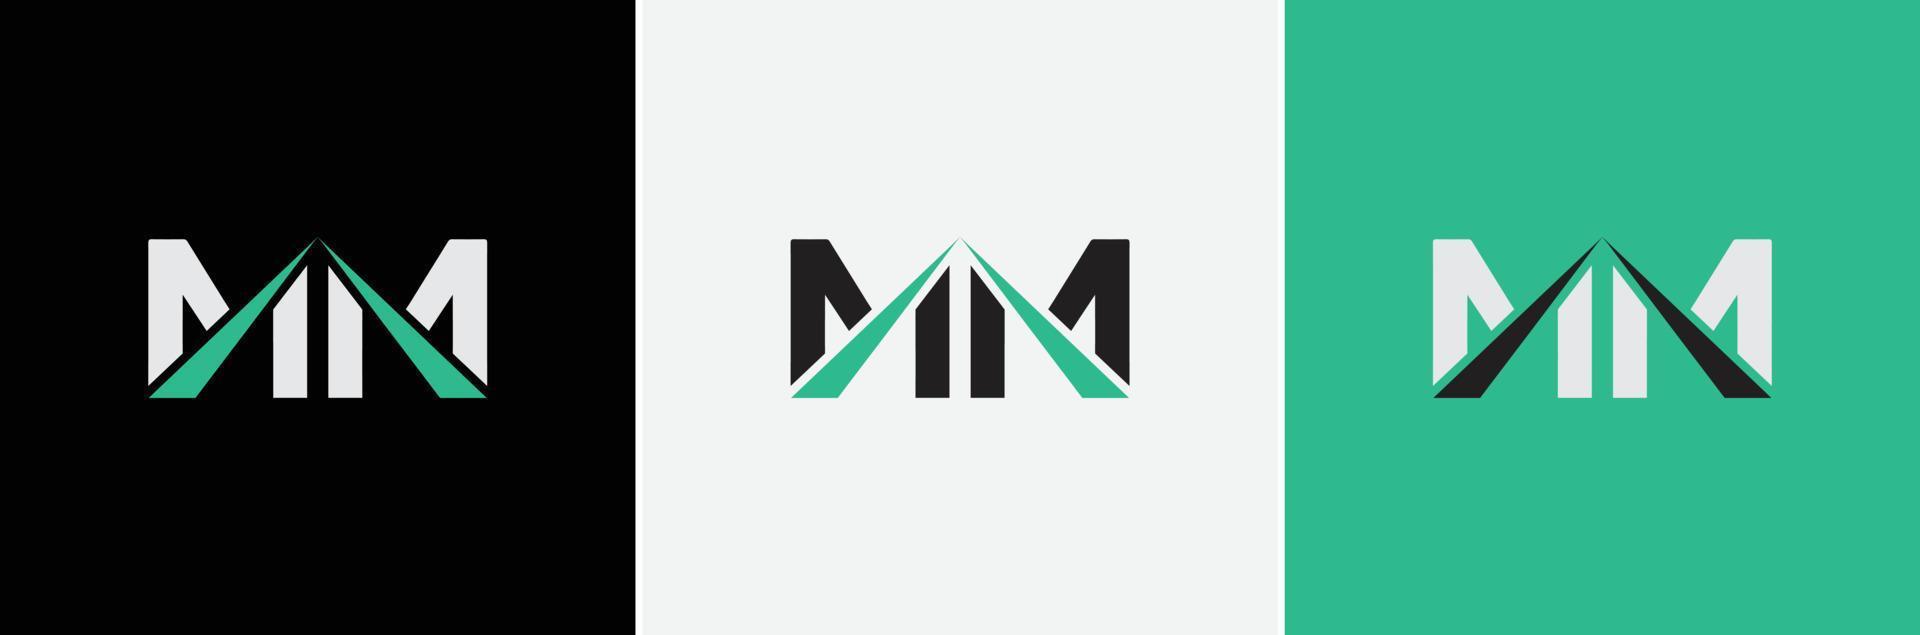 mm logotyp kreativ modern minimalalfabet m initial bokstavsmärke monogram redigerbar i vektorformat vektor